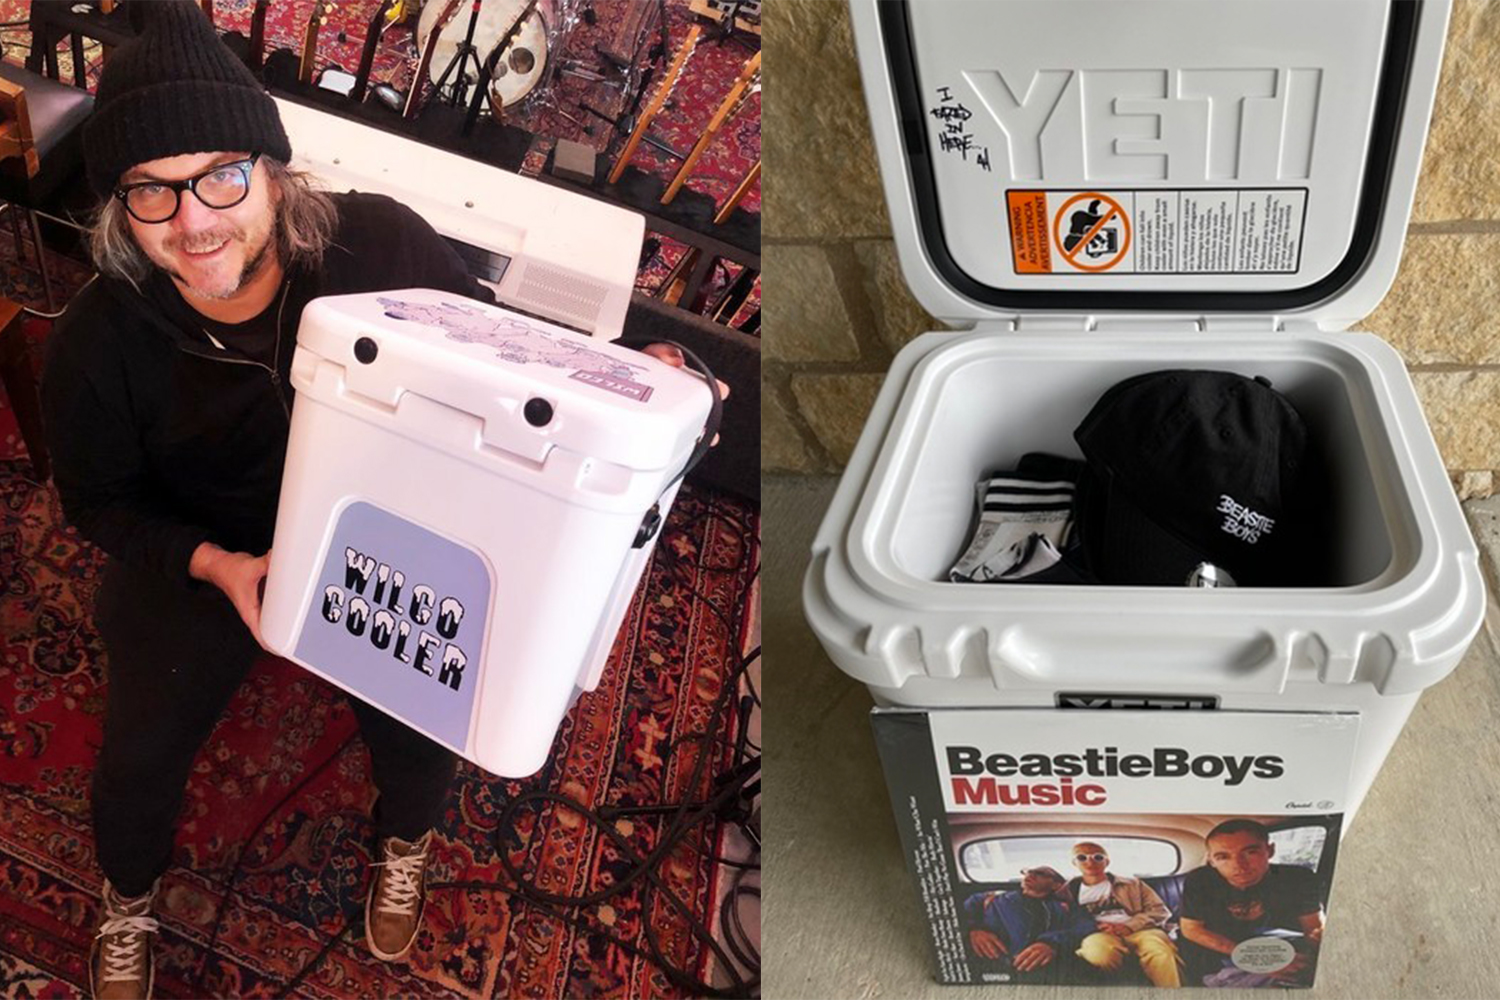 Wilco and Beastie Boys Yeti coolers